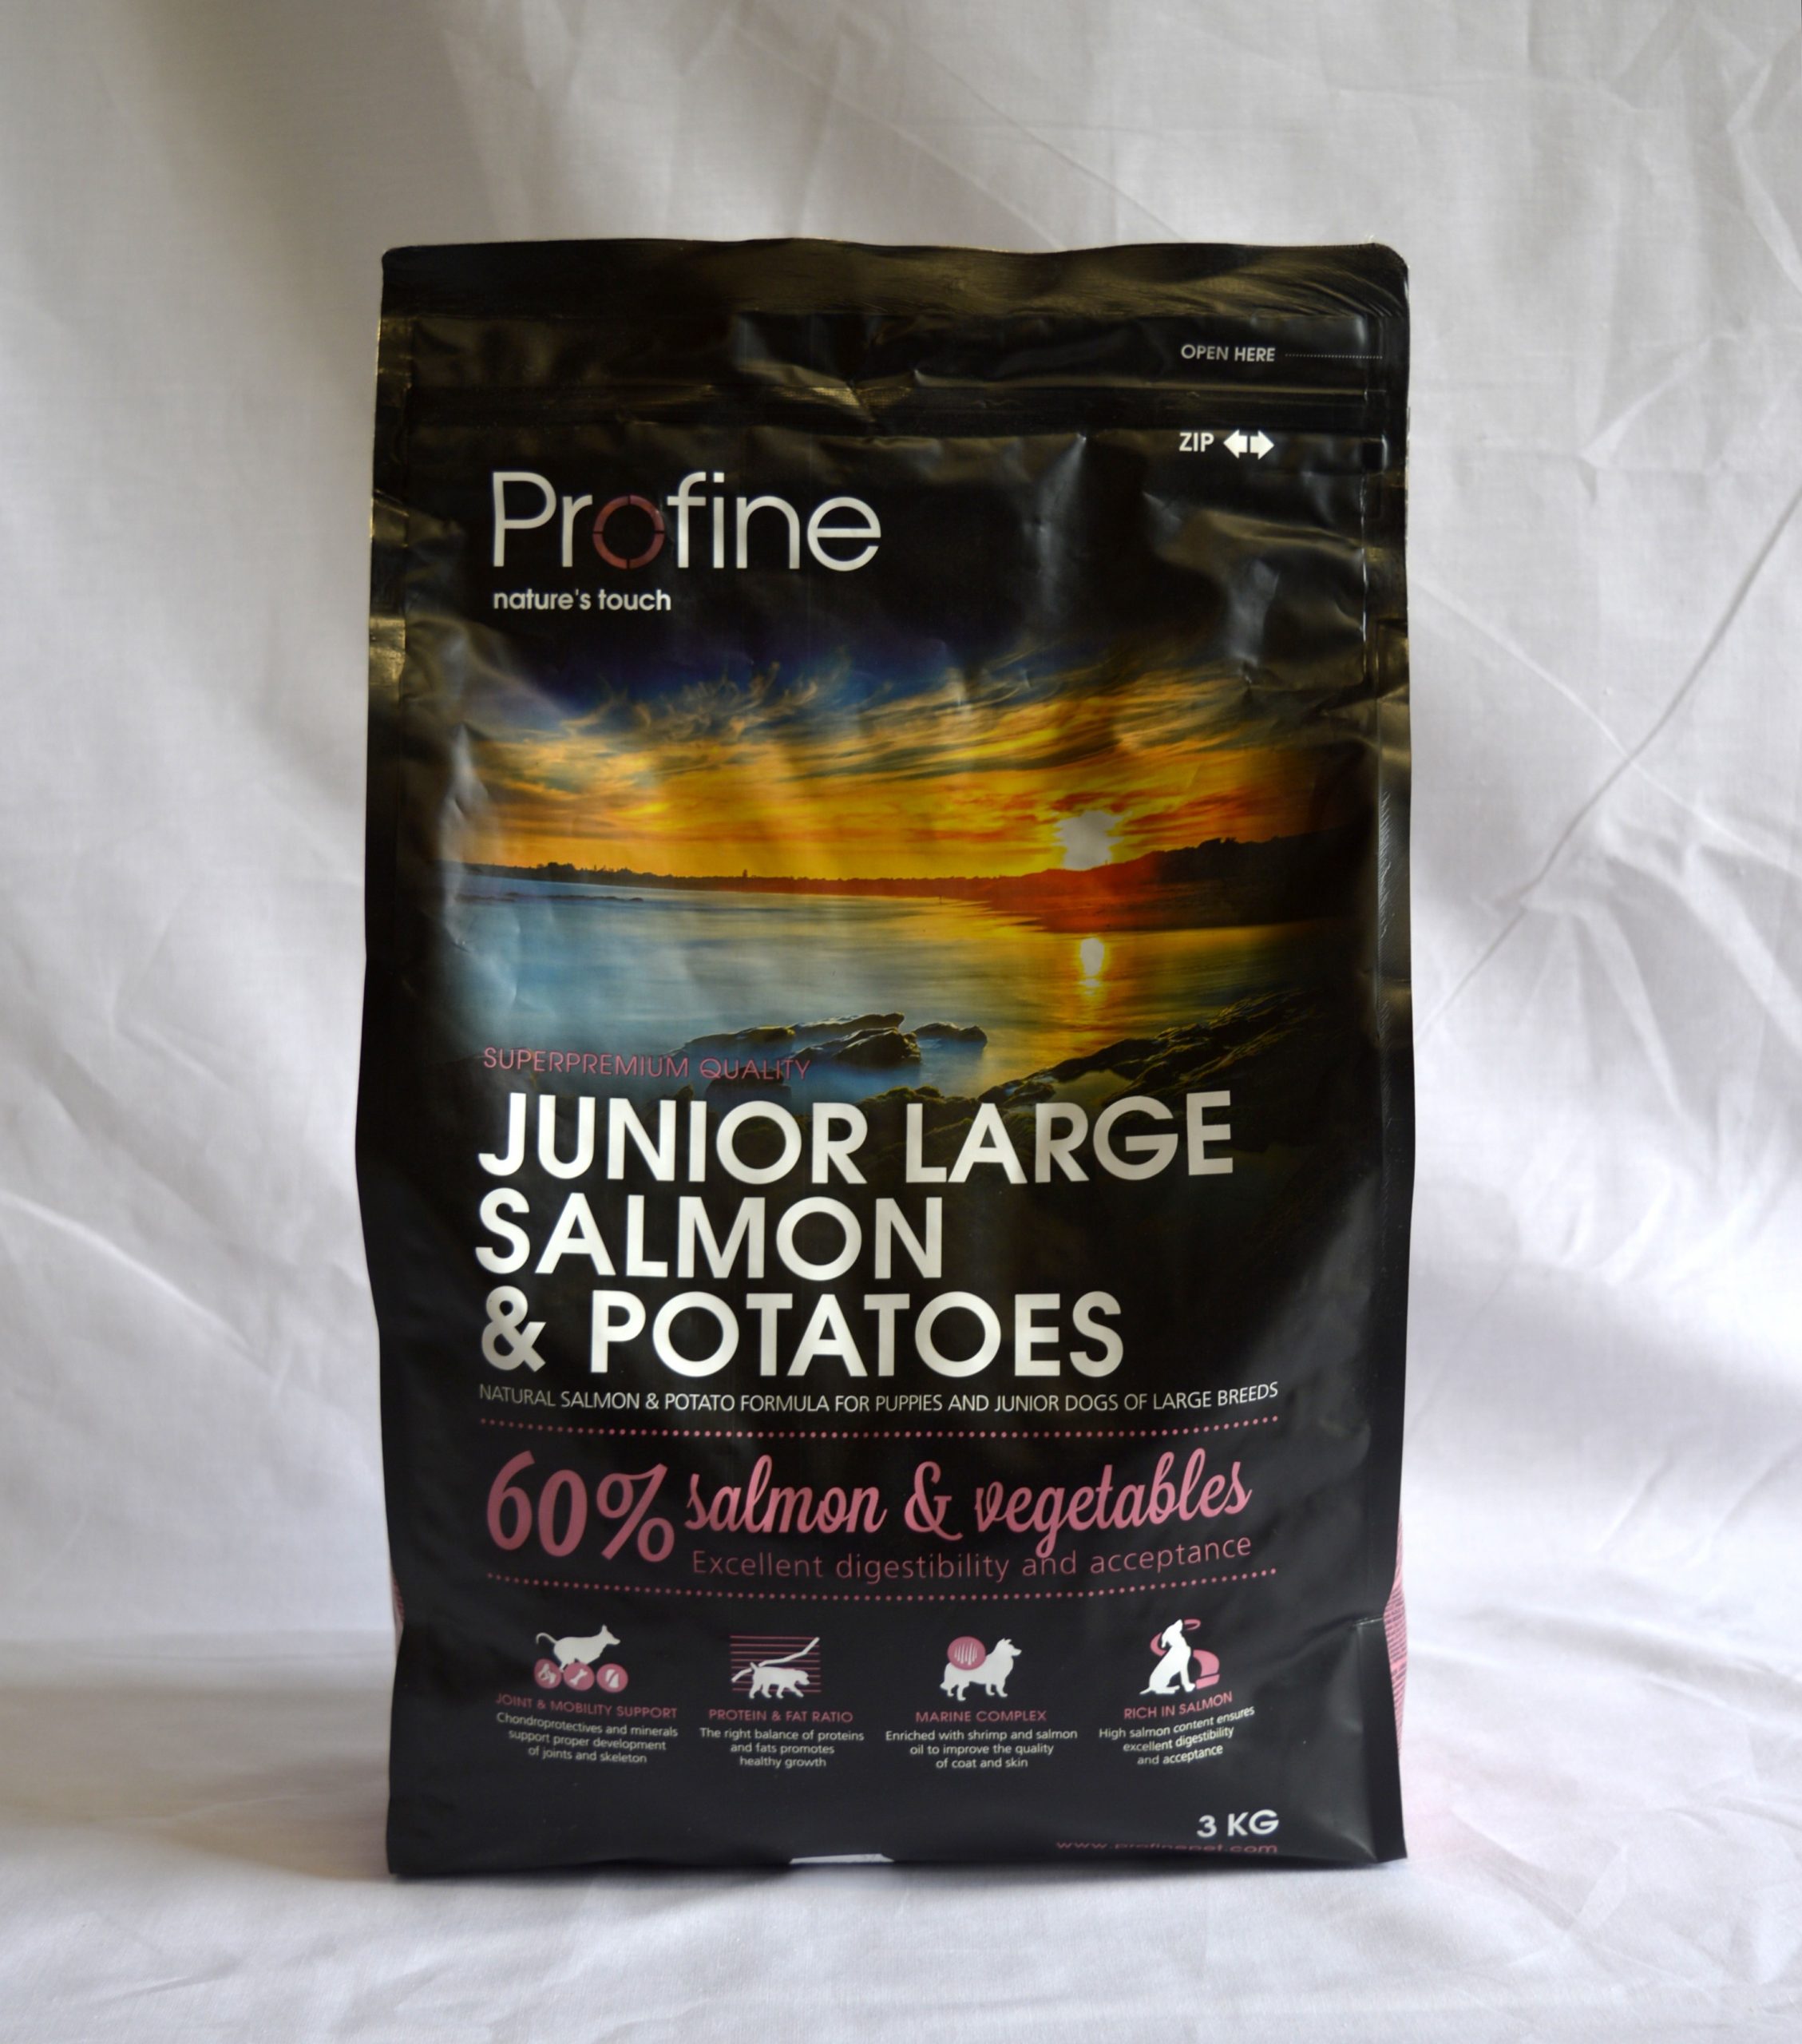 Profine Salmon & Potatoes Junior Large-3kg